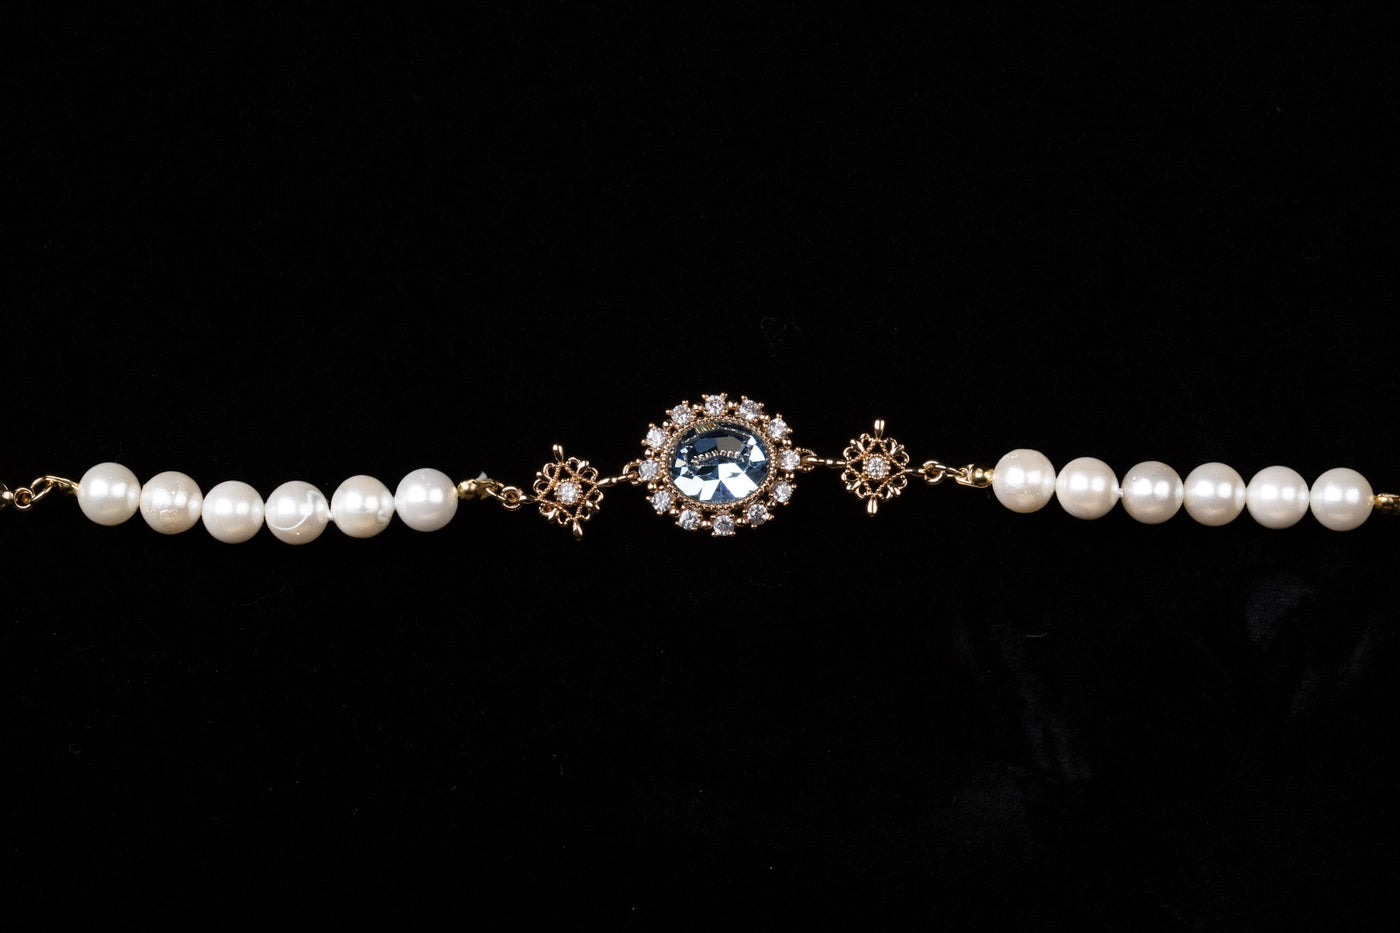 Vintage Baroque Blue Gemstones Bracelet- Precious Stone Crystal Pearl for Women Regency Era Style - French Lolita Jewelry - WonderlandByLilian